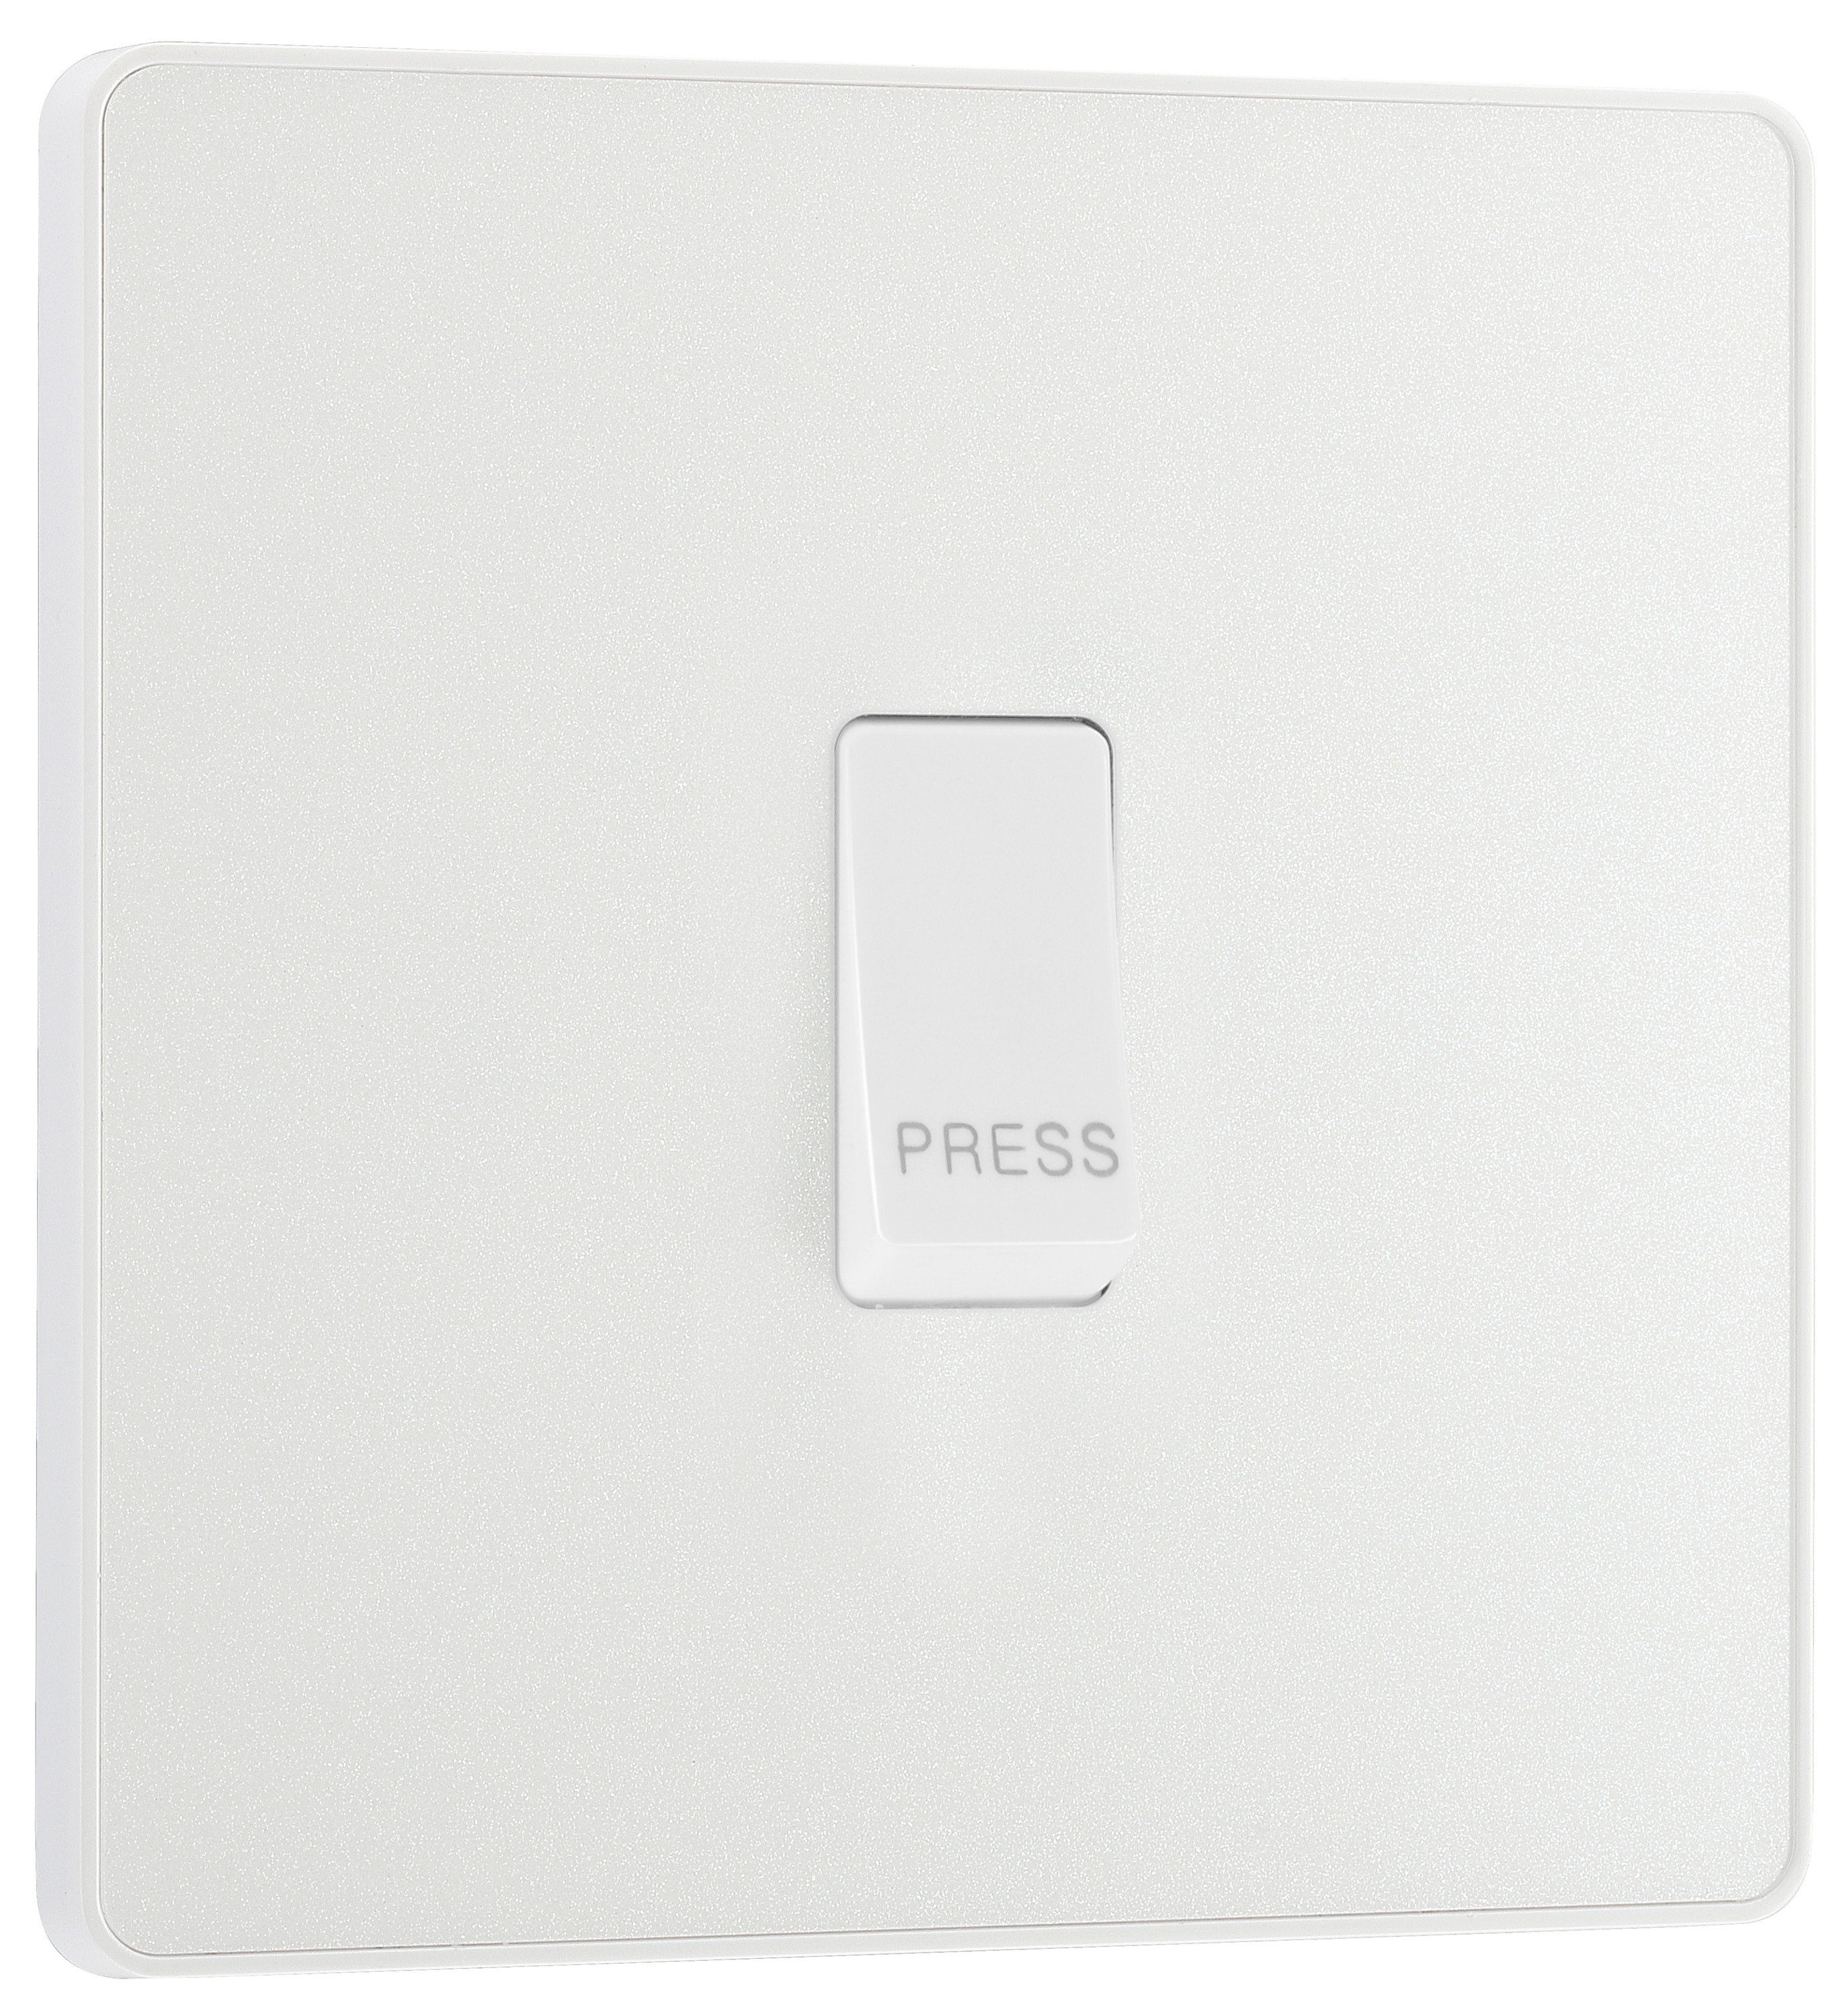 BG Evolve Pearlescent White 10A Single Press Switch